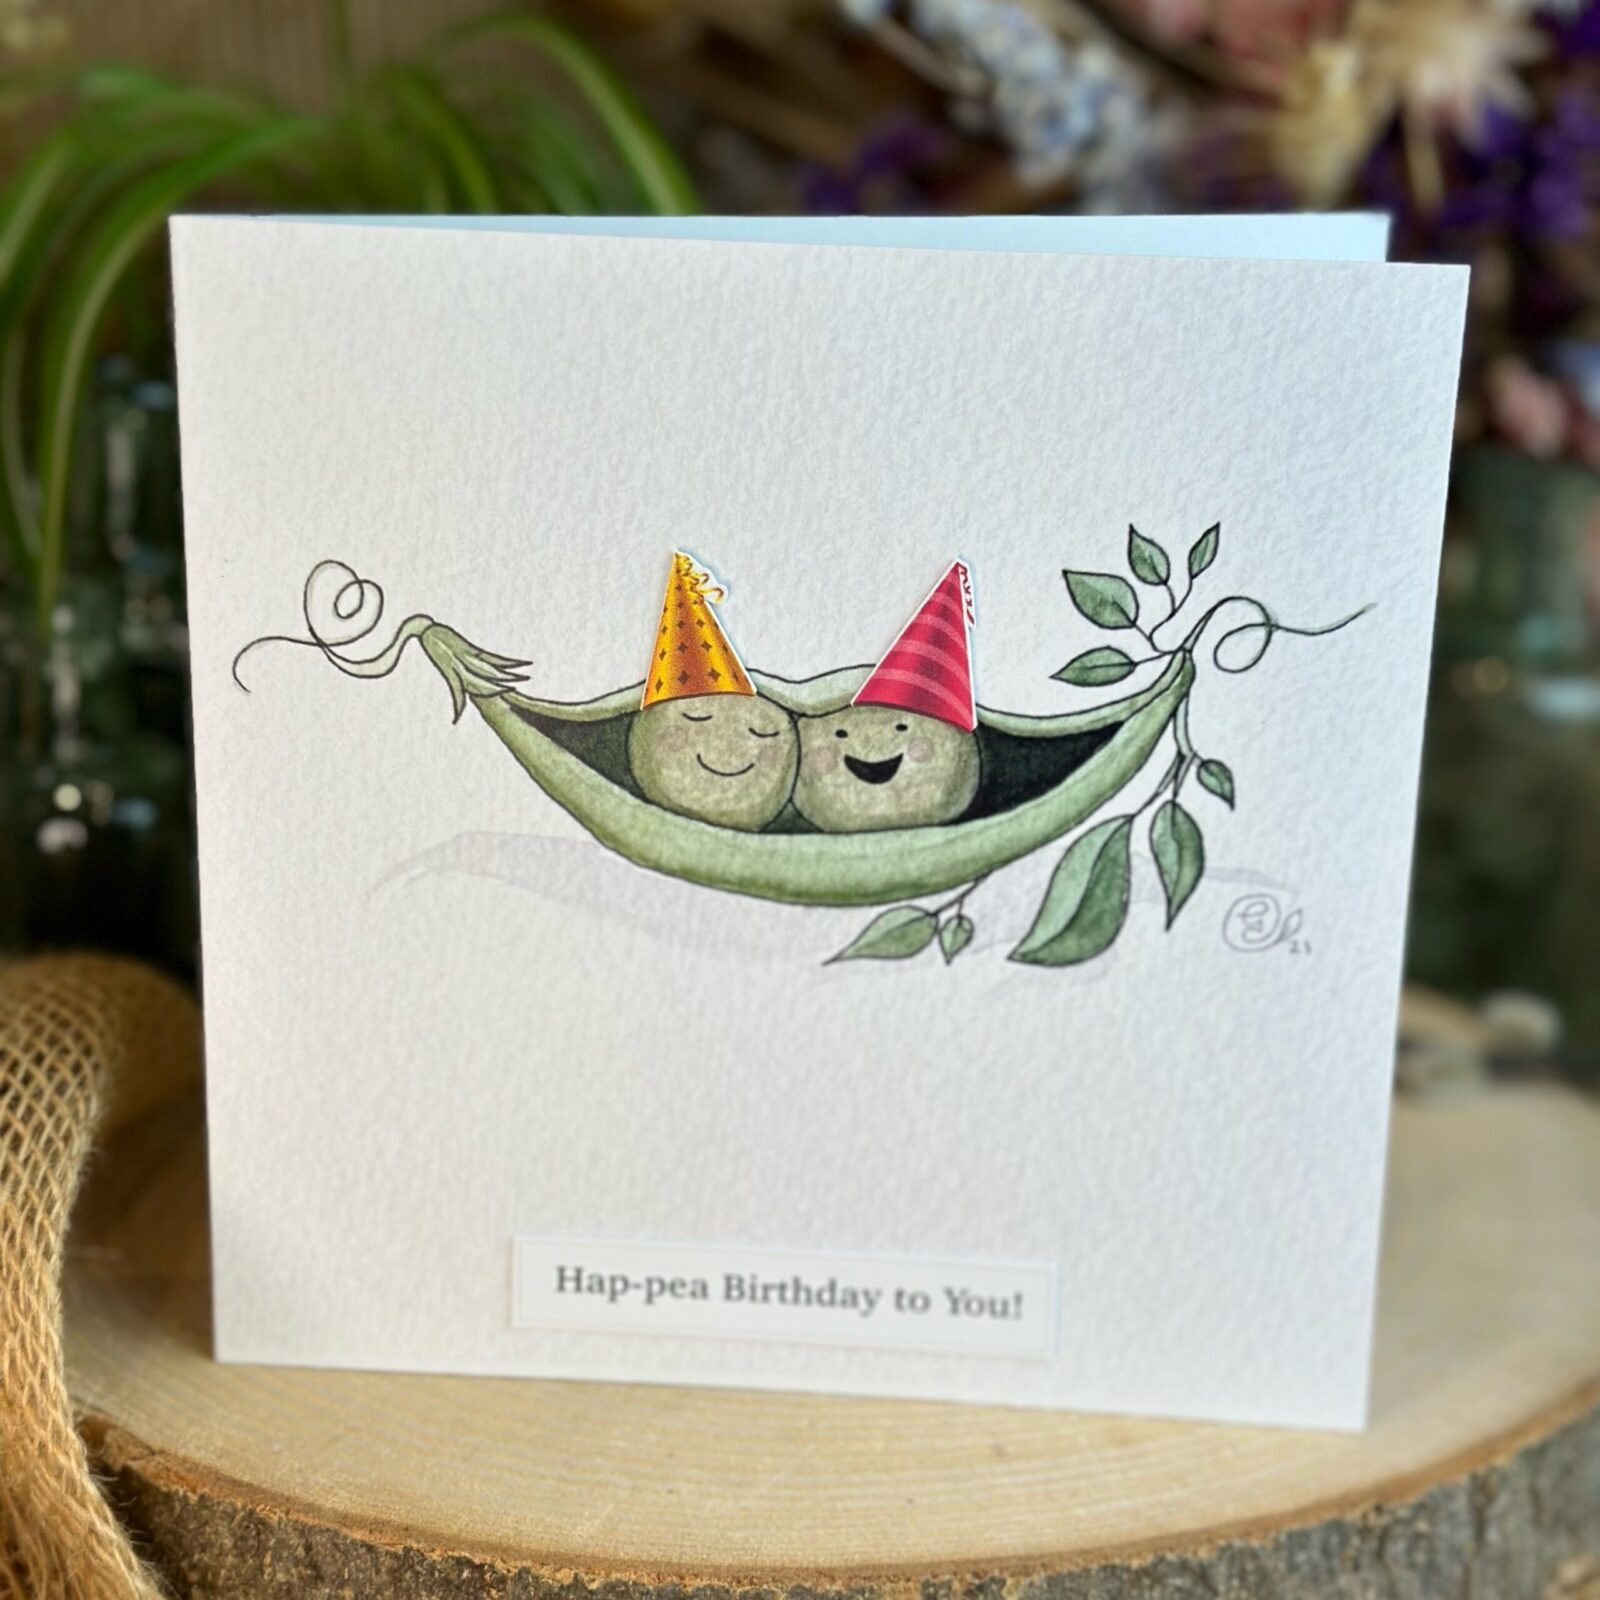 Hap-pea pink hat birthday card